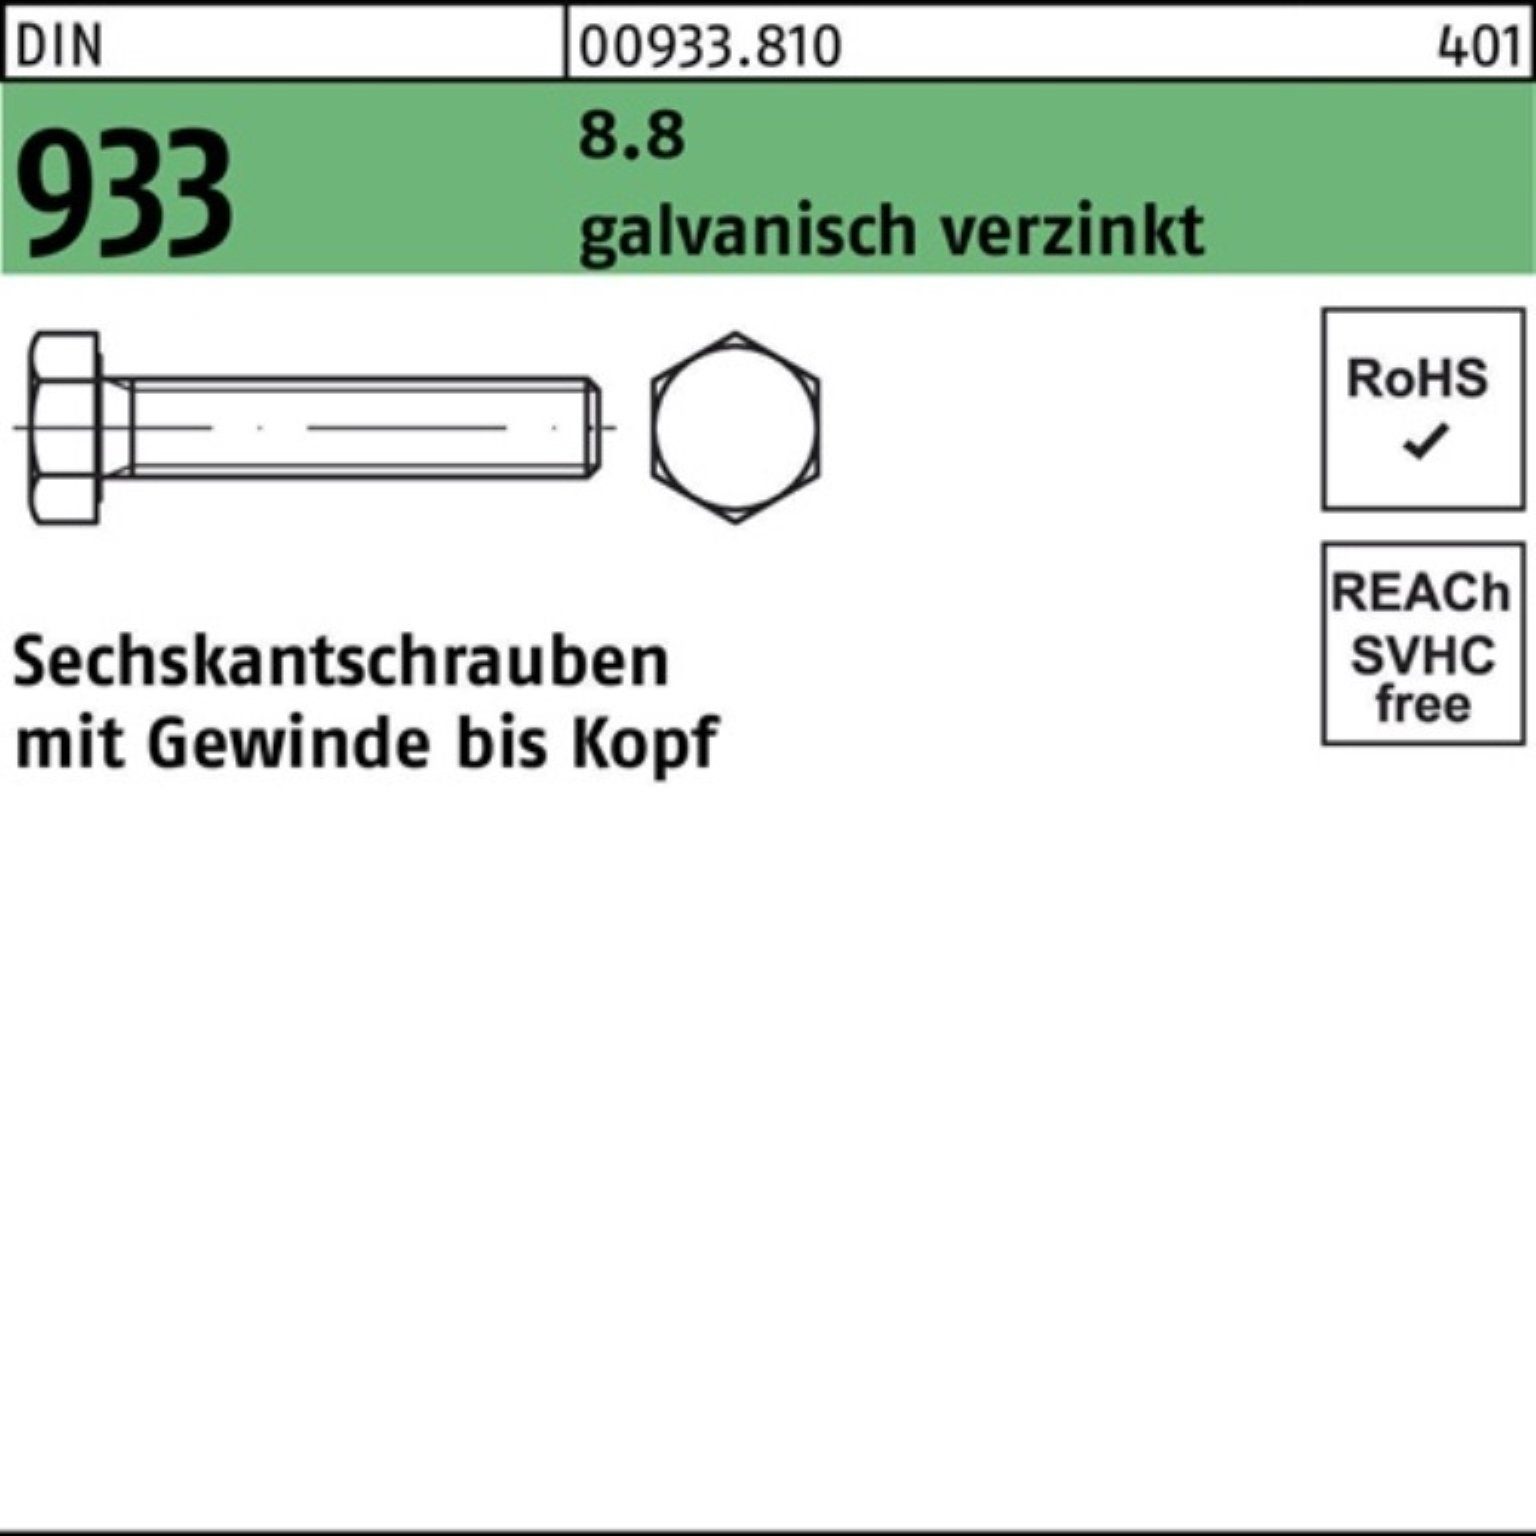 St Sechskantschraube Pack 170 DIN 8.8 10 VG 933 Reyher galv.verz. 100er M20x Sechskantschraube